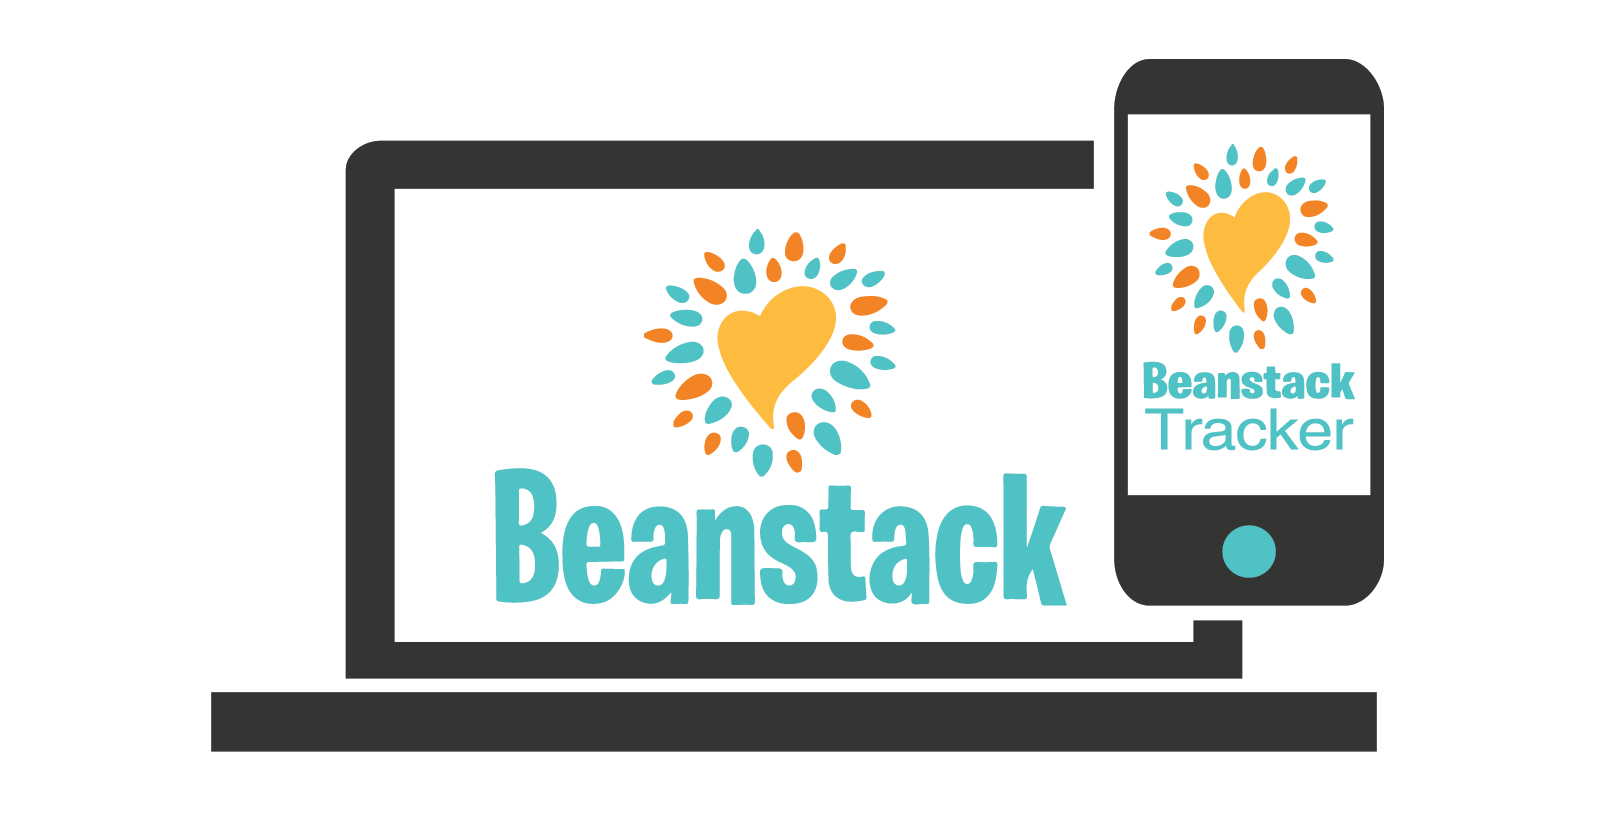 Visit Beanstack online